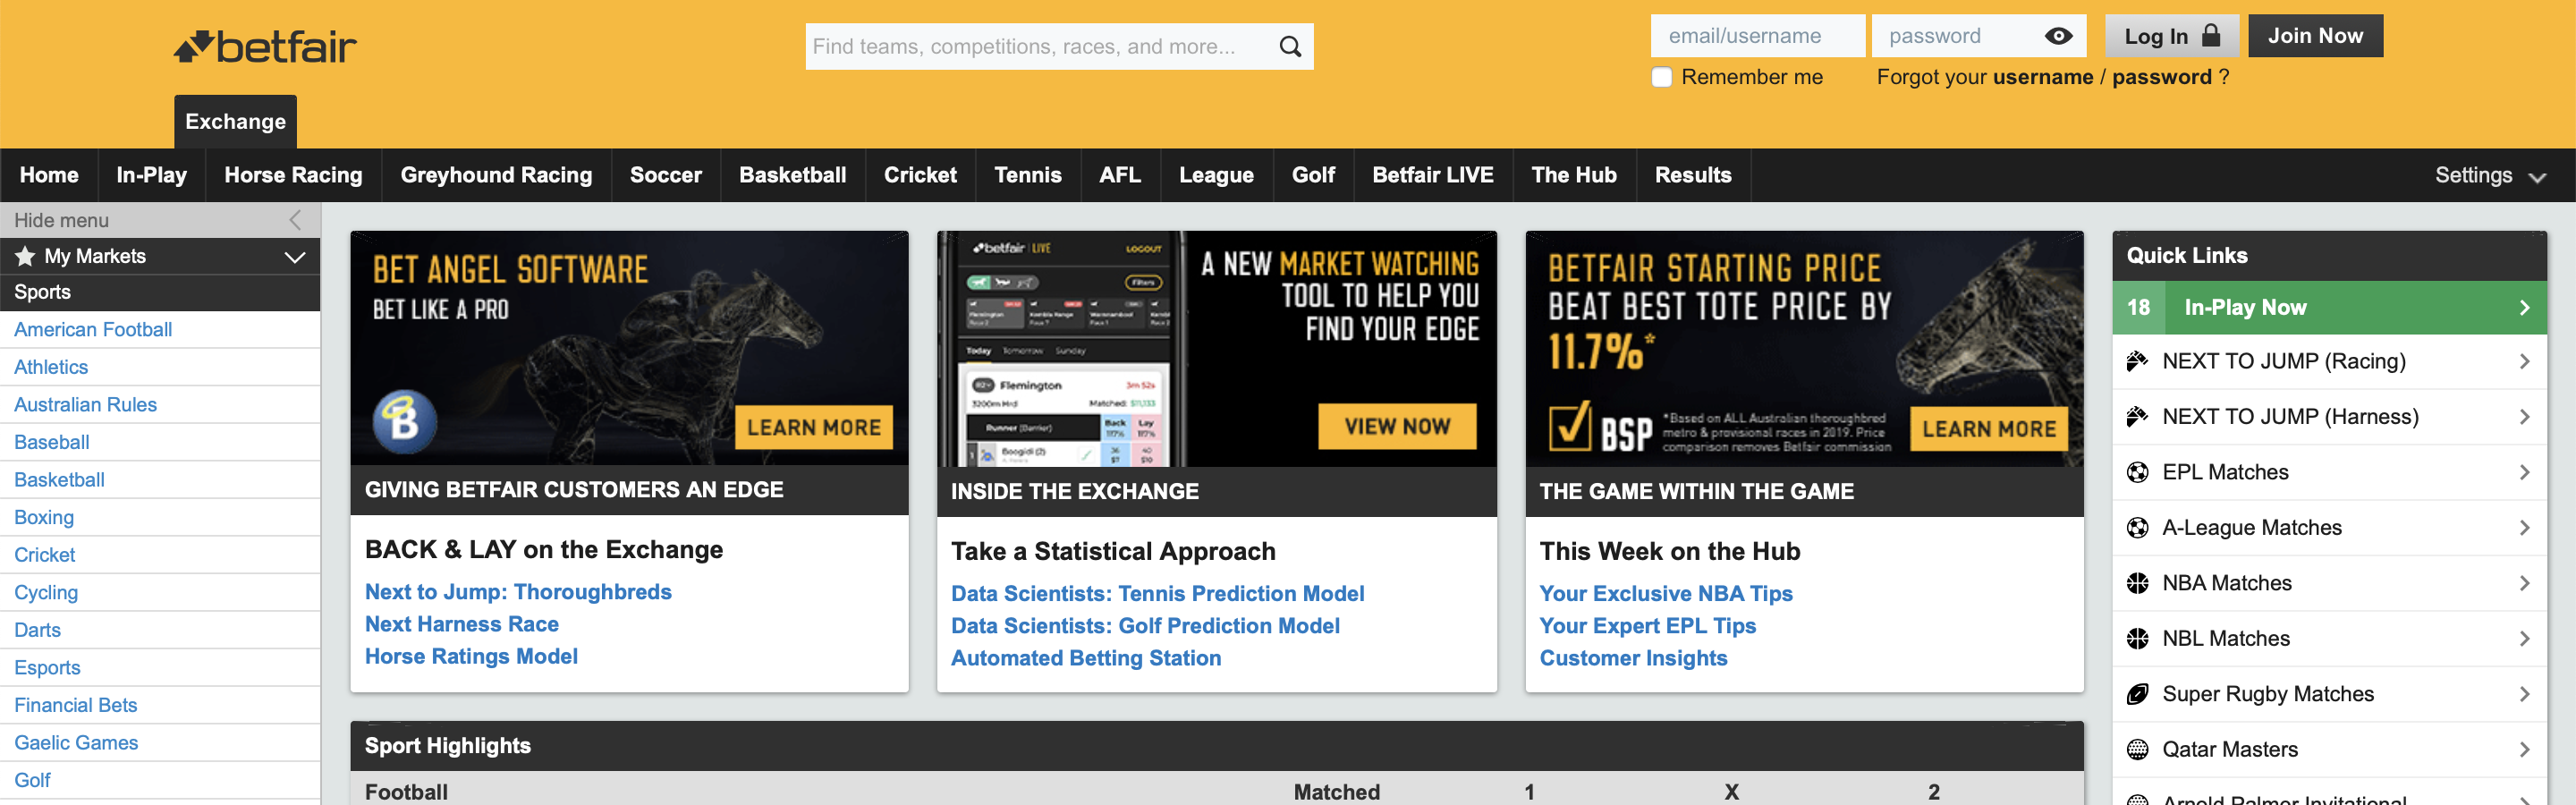 Best Betting Sites - Betfair Interface